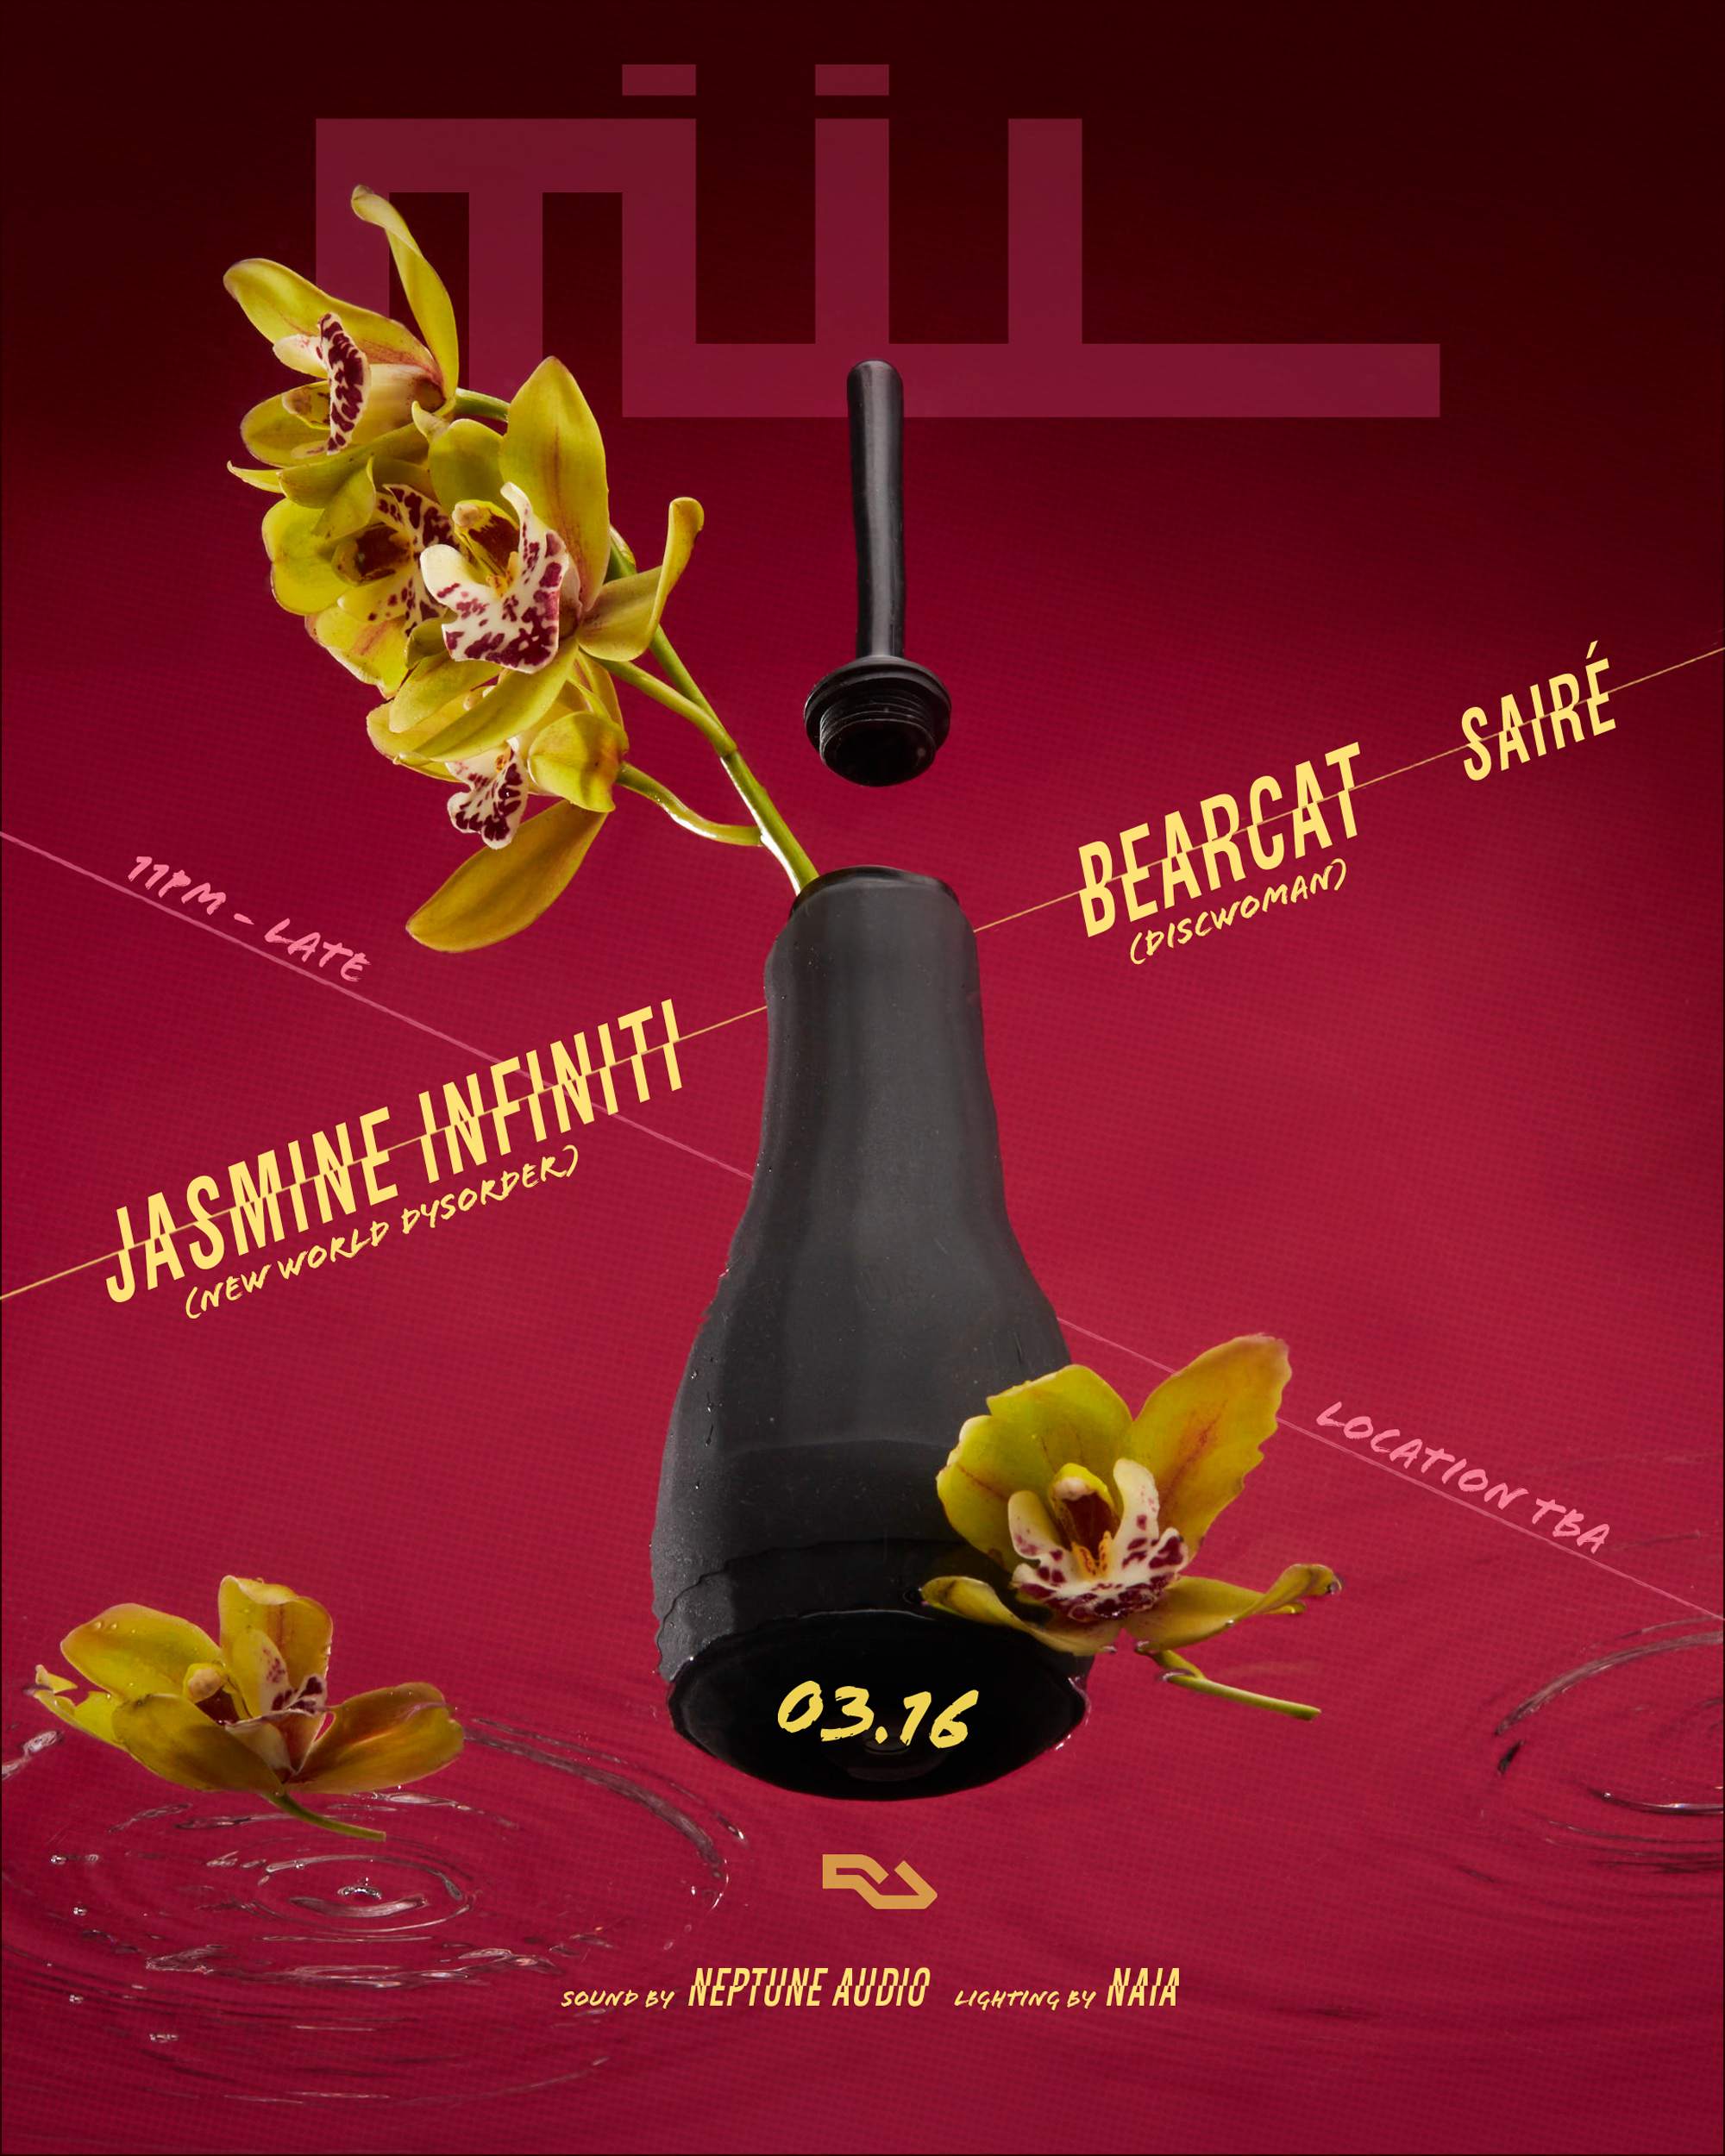 MÜLL: Bearcat - Jasmine Infiniti - Sairé - Kudeki - Página frontal